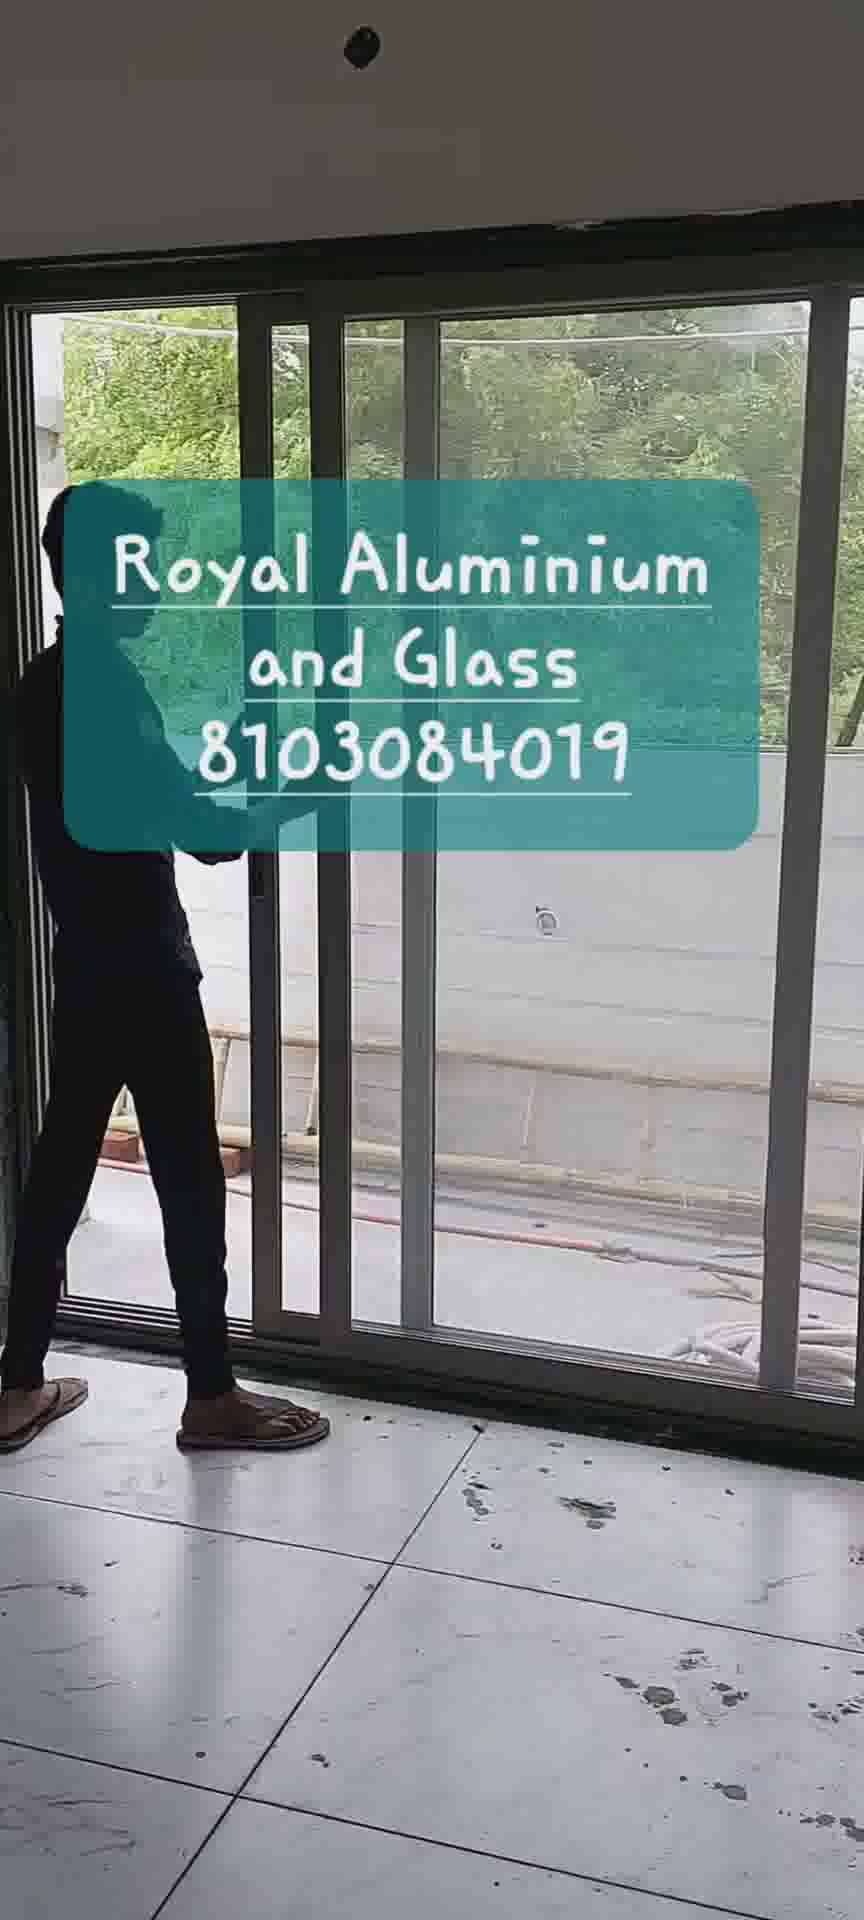 looking Royal Touch windows 
royal AluminiumAnd glass
Sliding series Aluminium Windows Quality products #koloapp  #HingedDoorWardrobe  #SlidingWindows  #AluminiumWindows  #coustomizewallpaper